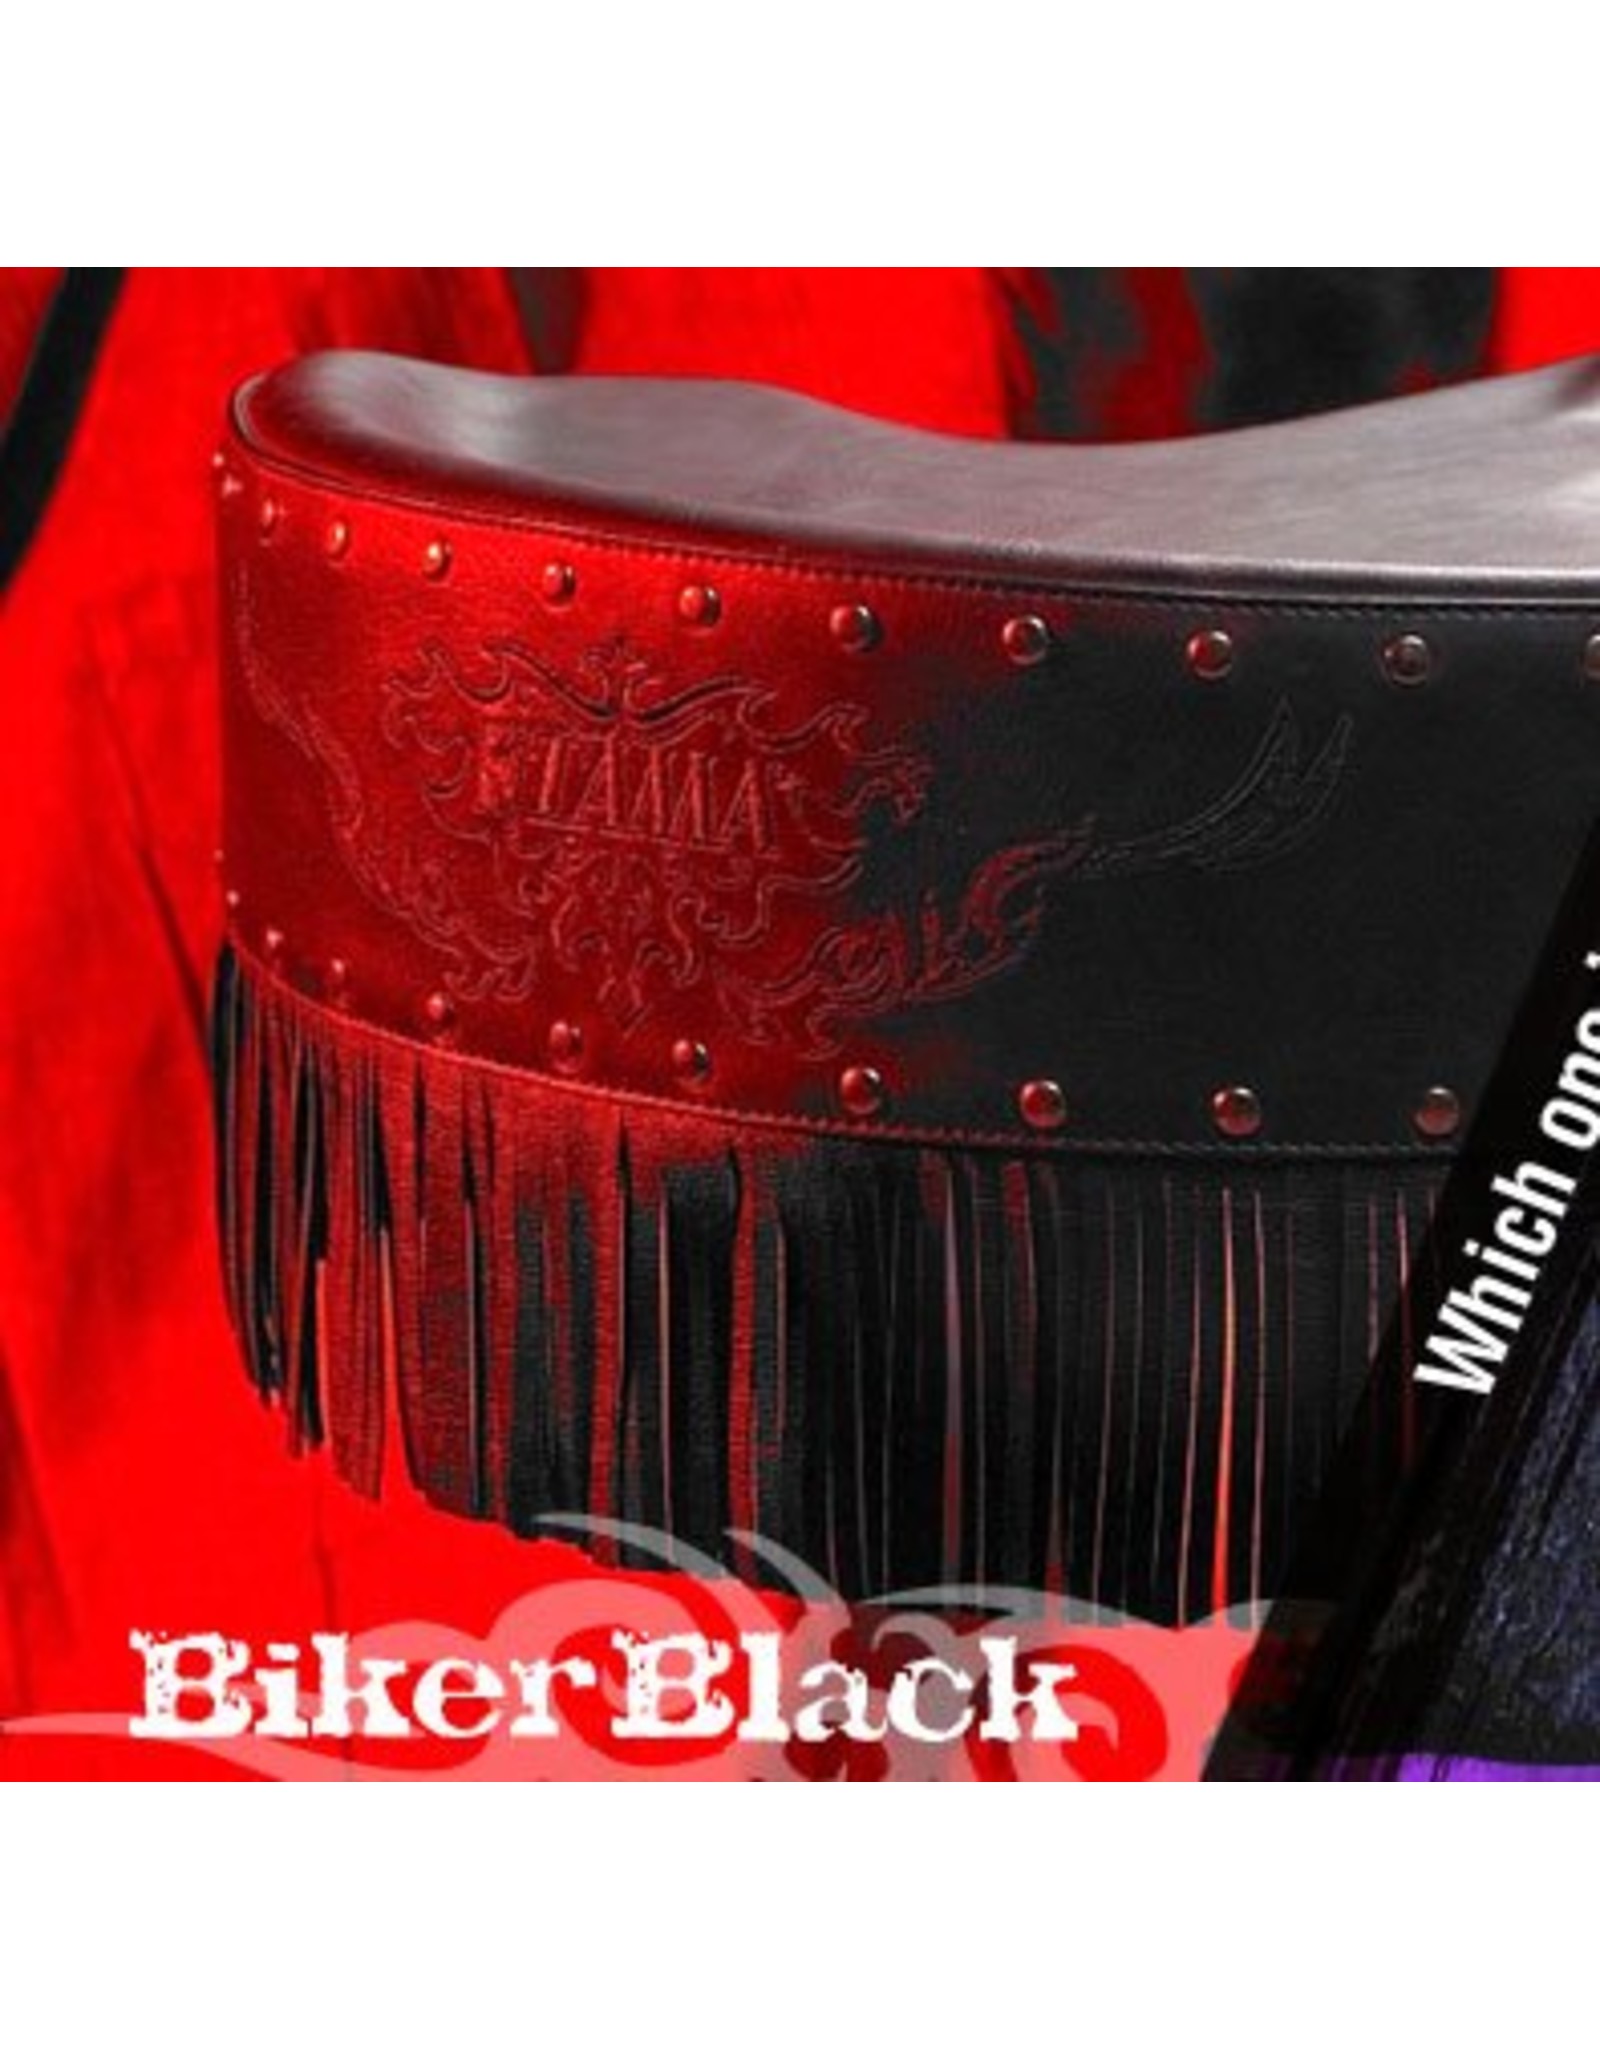 Tama HT530E5  drum stool Wide Rider Bike Trio Drum Stool Limited Edition